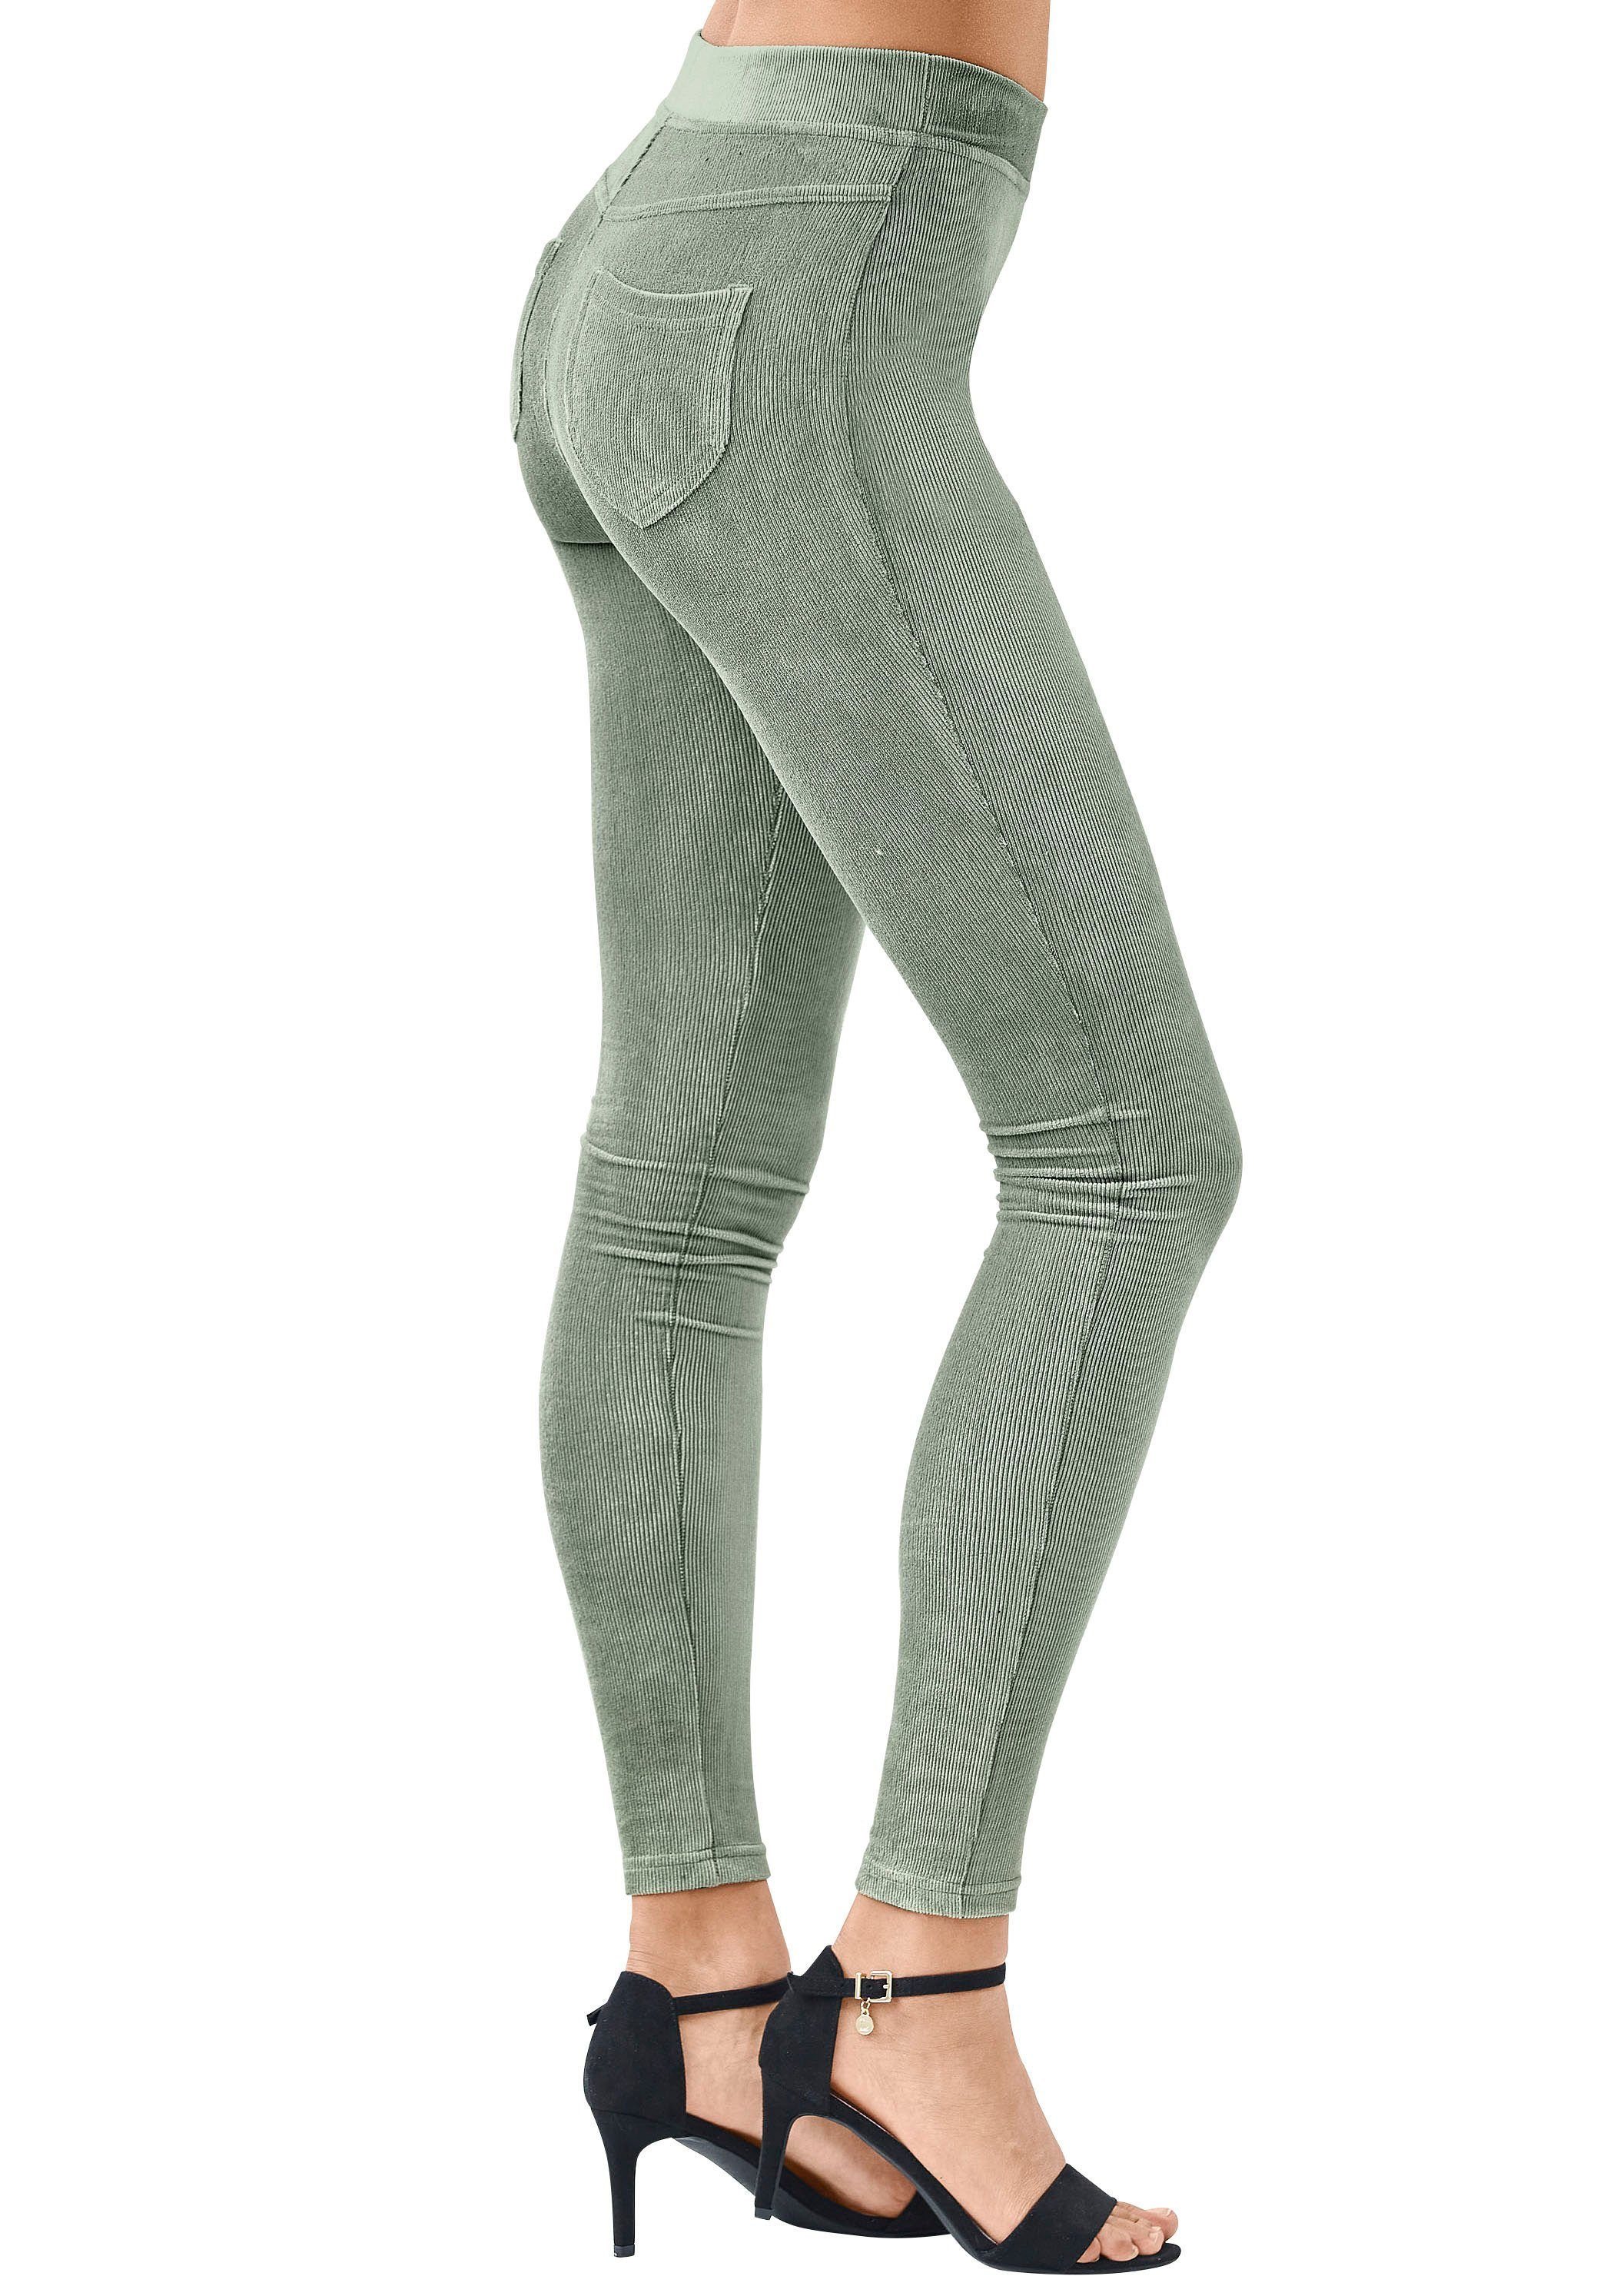 LASCANA Leggings aus weichem Material in Cord-Optik, Loungewear mint grün